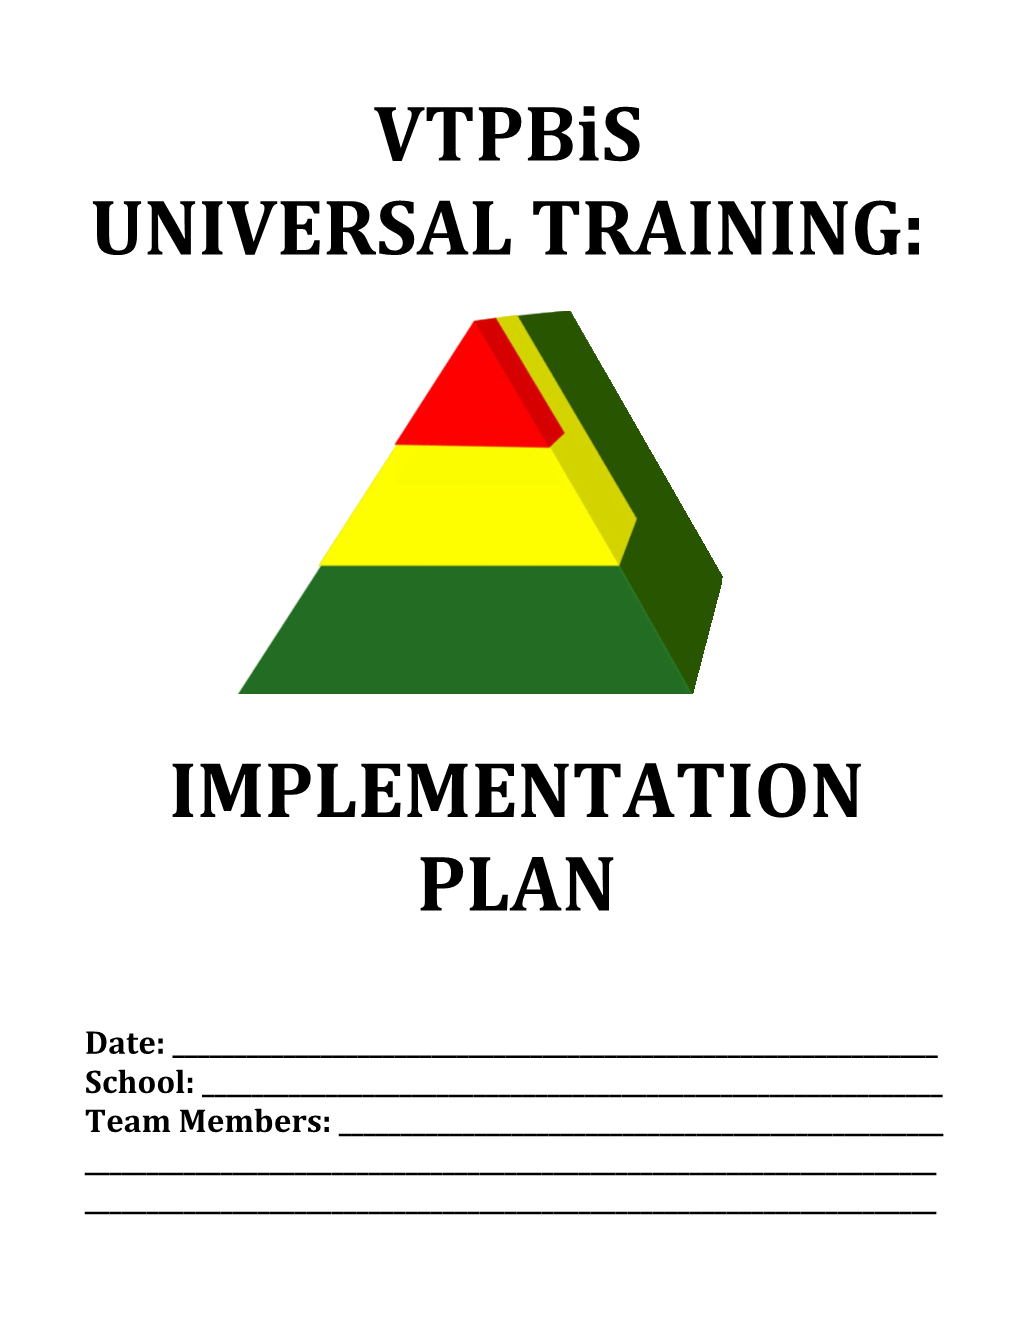 Universal Training